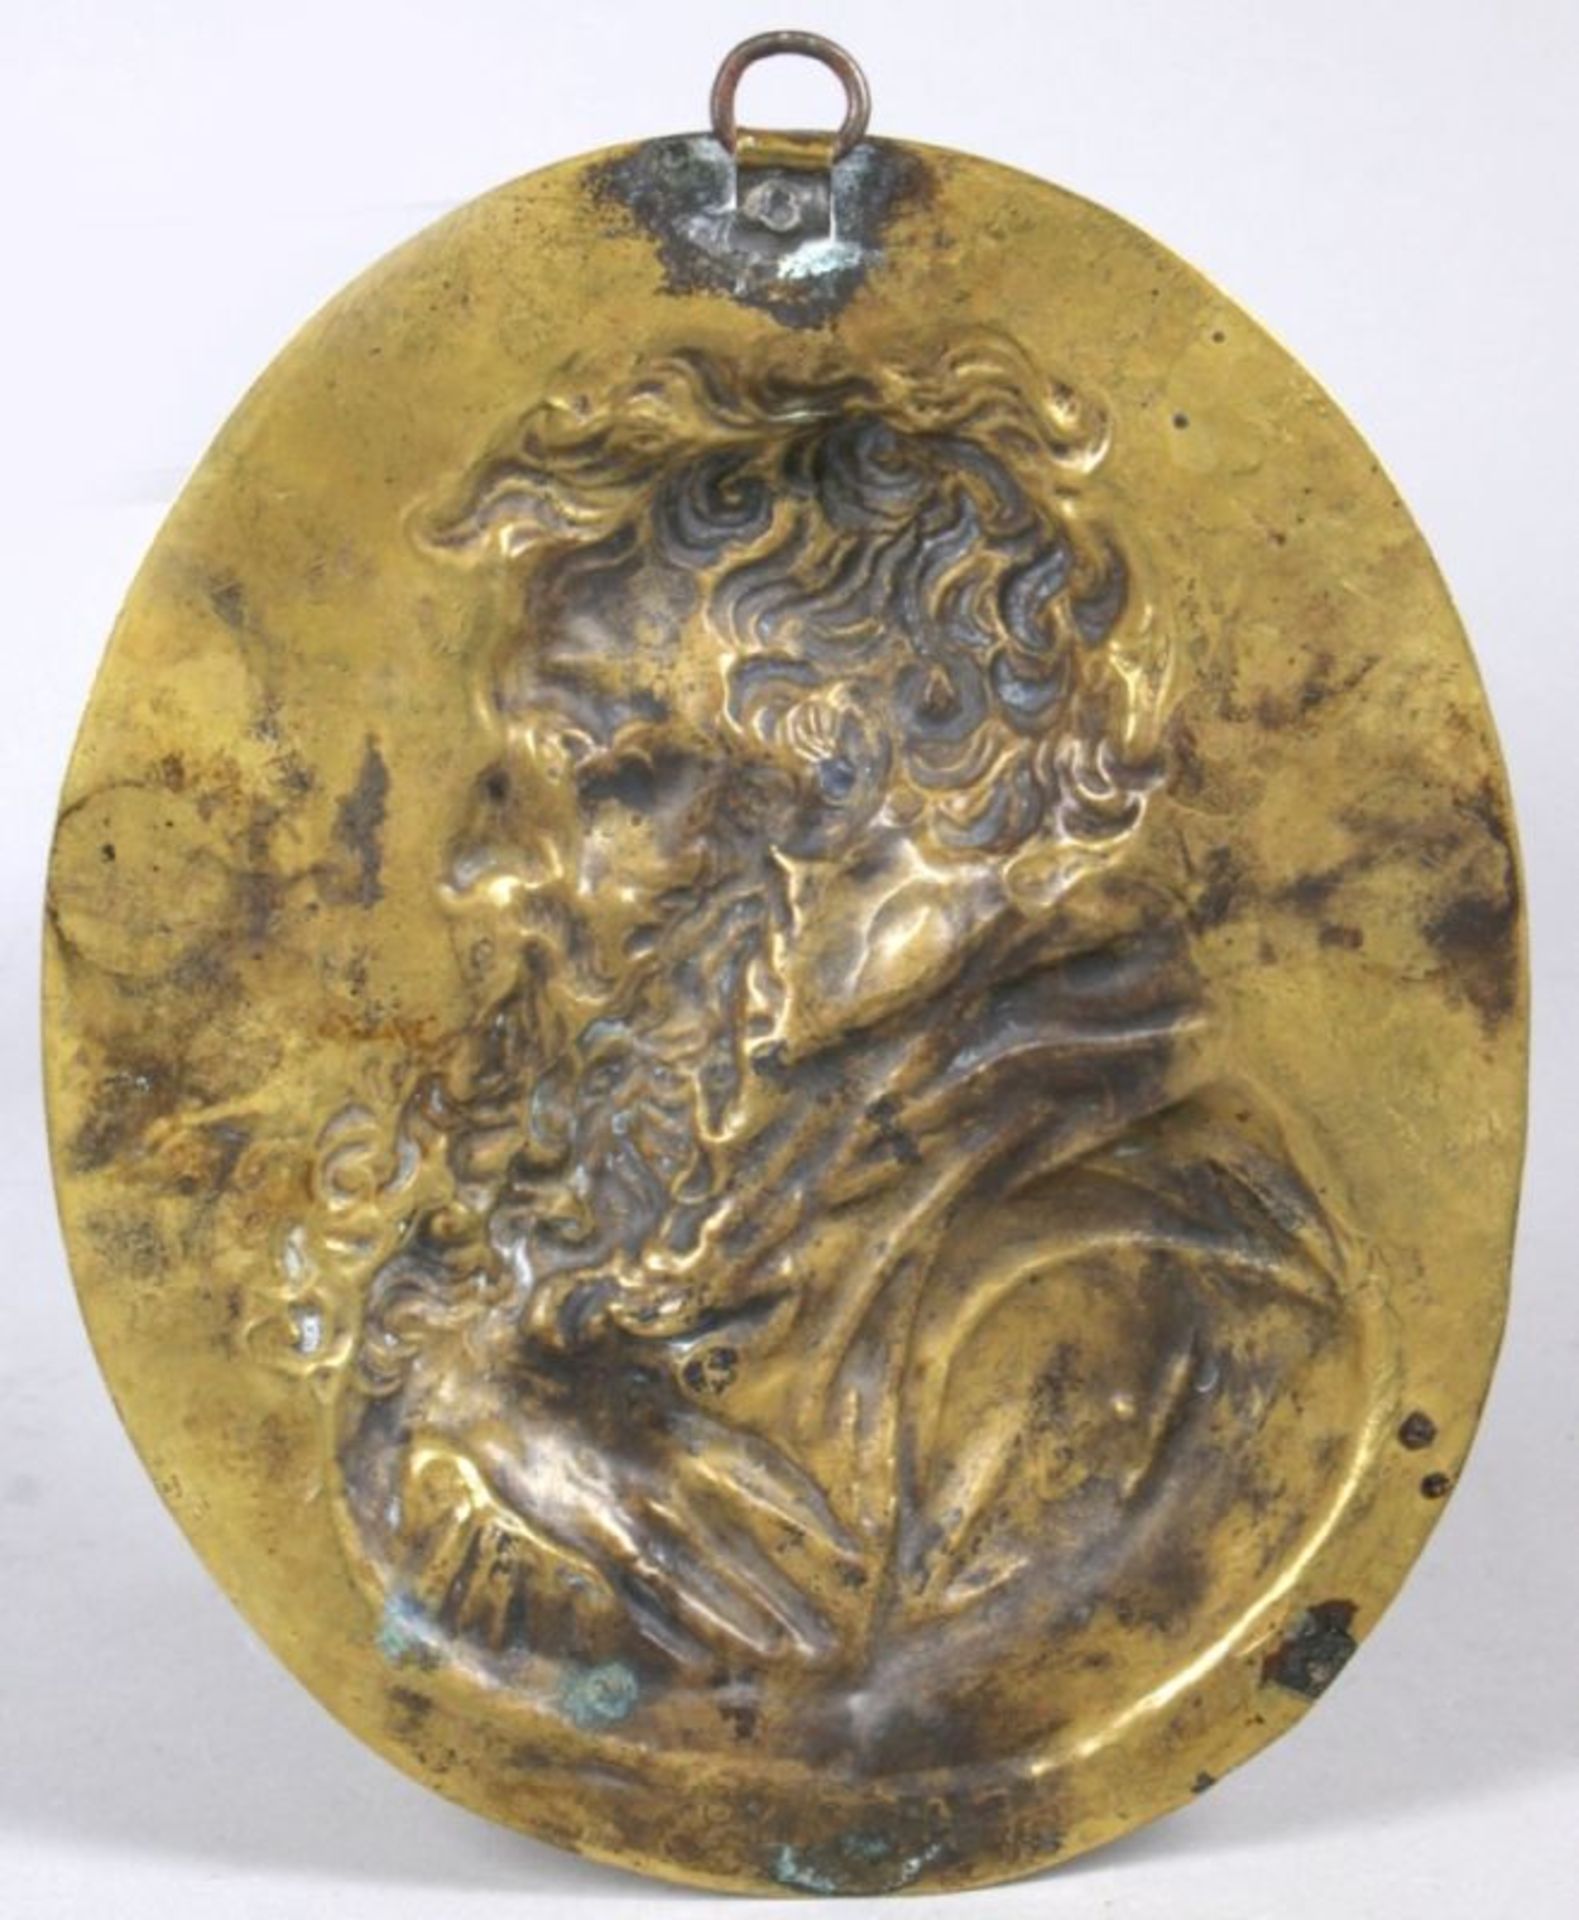 Messing-Reliefwandplatte, "St. Paulus", 18. Jh., ovale Form, handgetriebenes,reliefplastisches, - Bild 2 aus 2